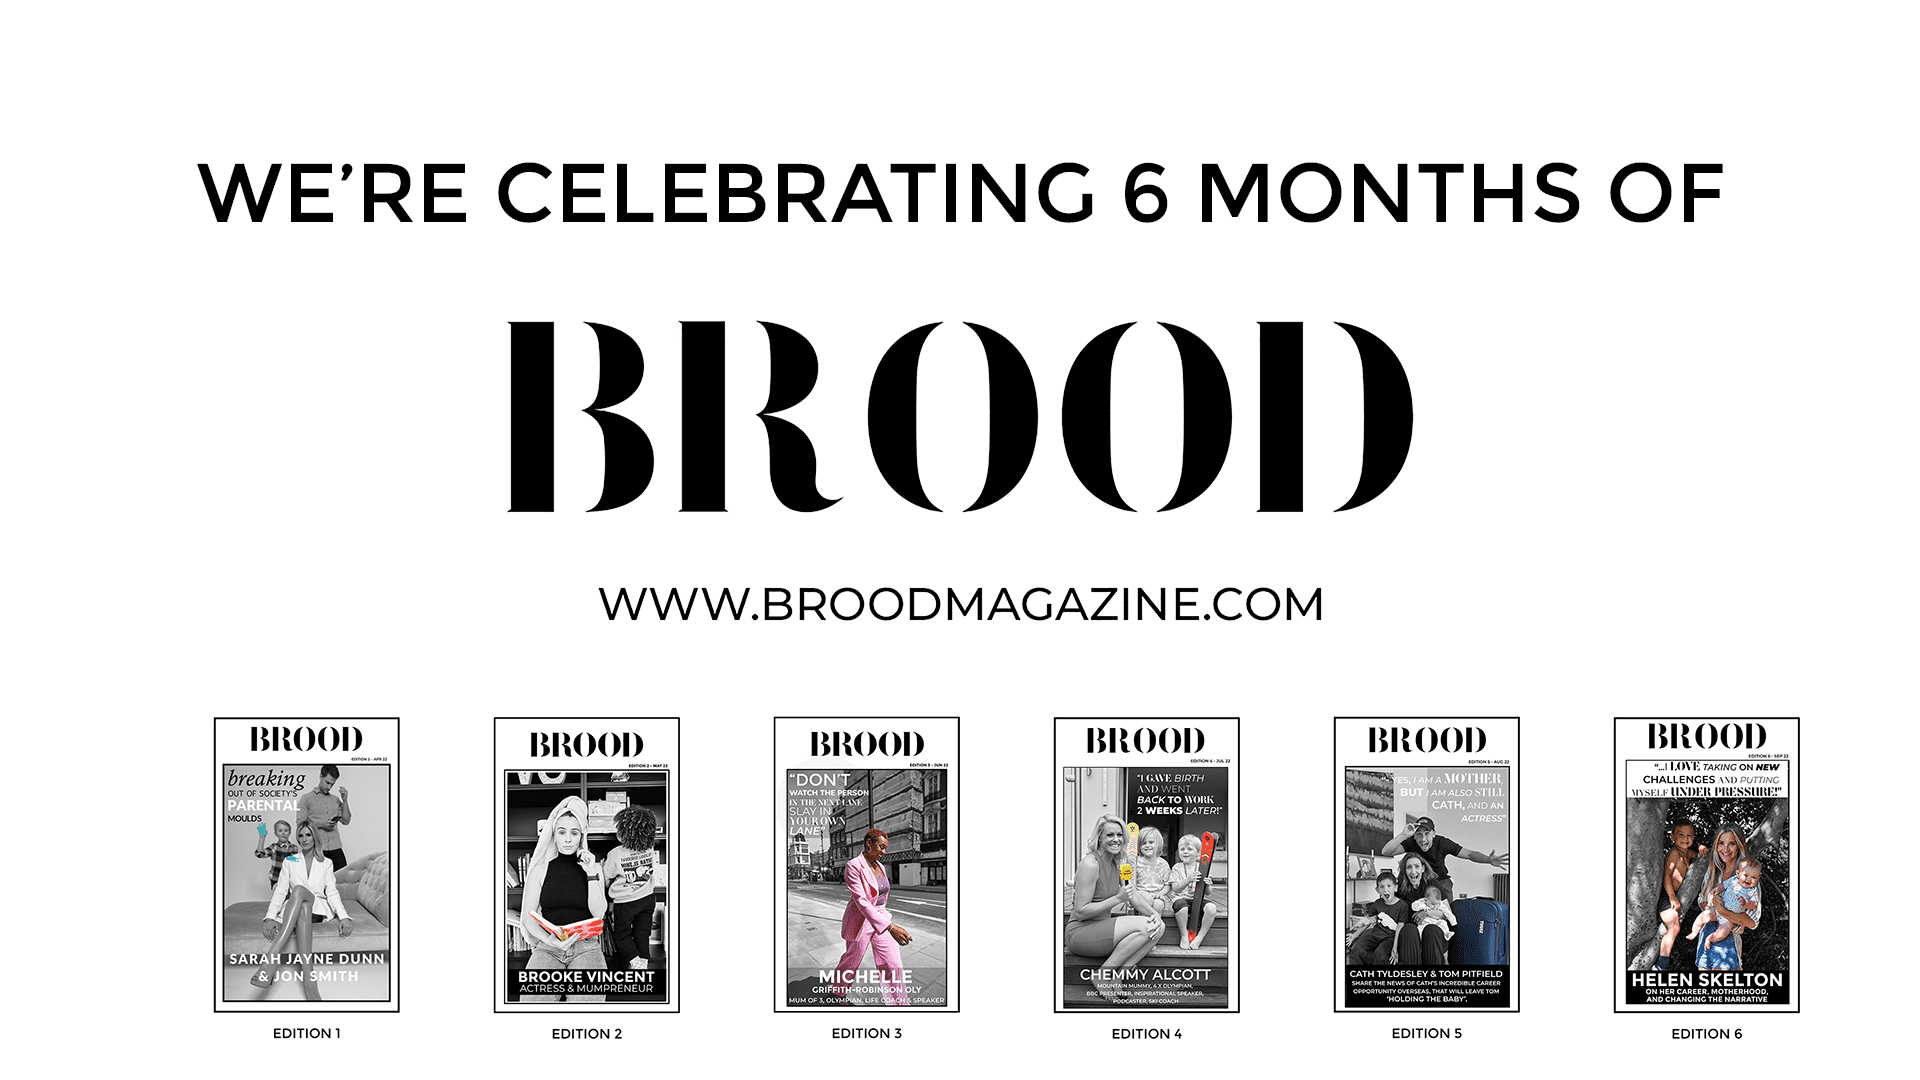 We're celebrating 6 months of brood magazine